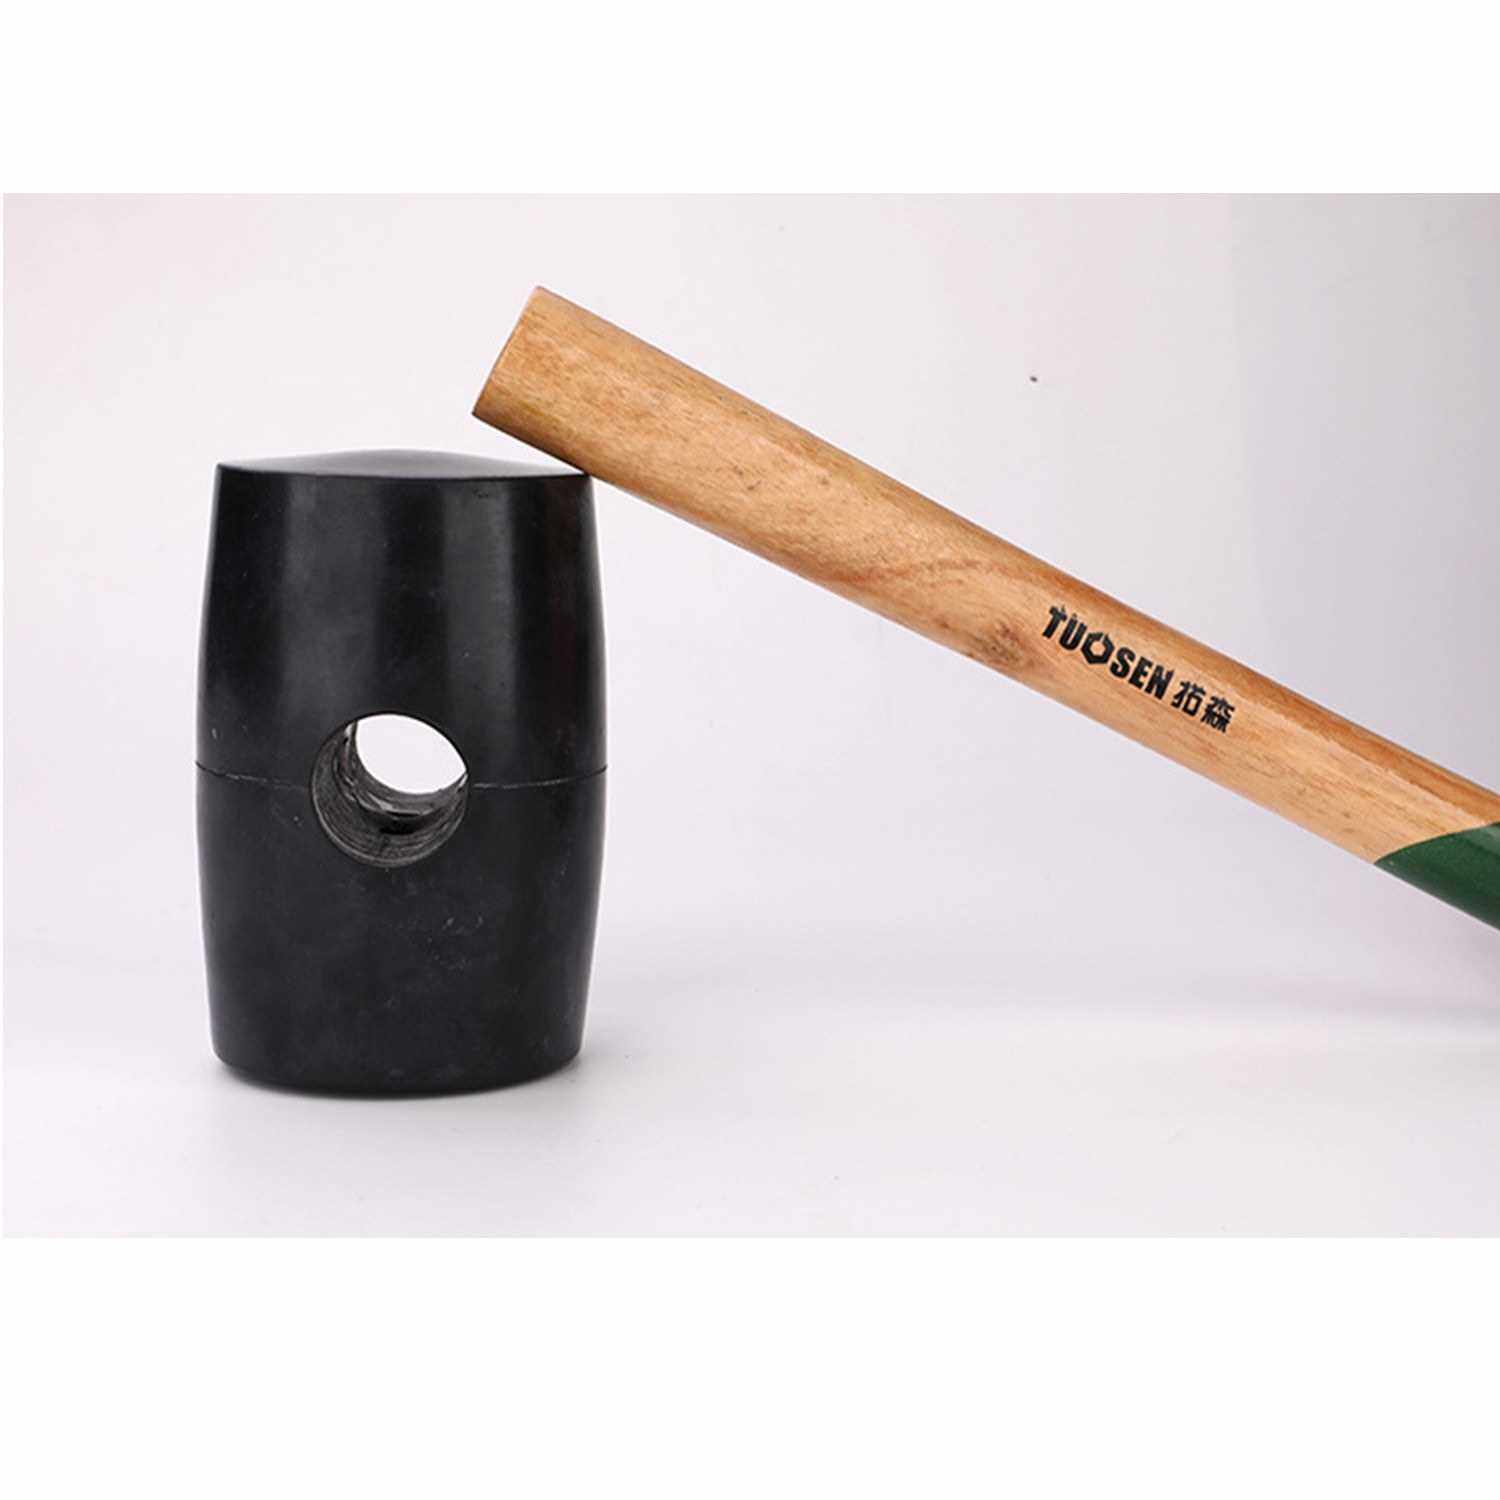 60500 Black Rubber Mallet Dual Face Tile Hammer with Wooden Handle (Black)